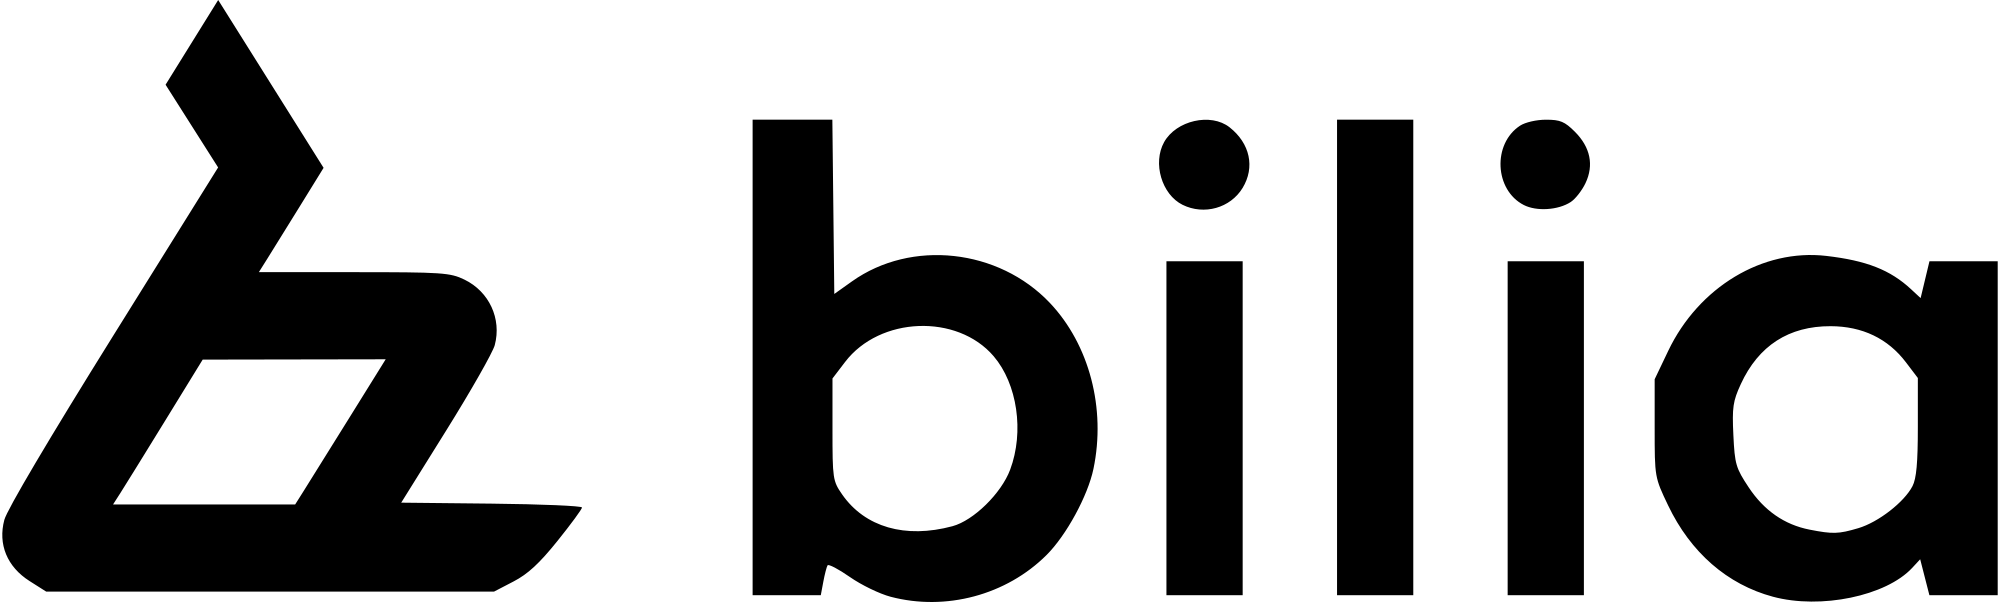 bilia logo